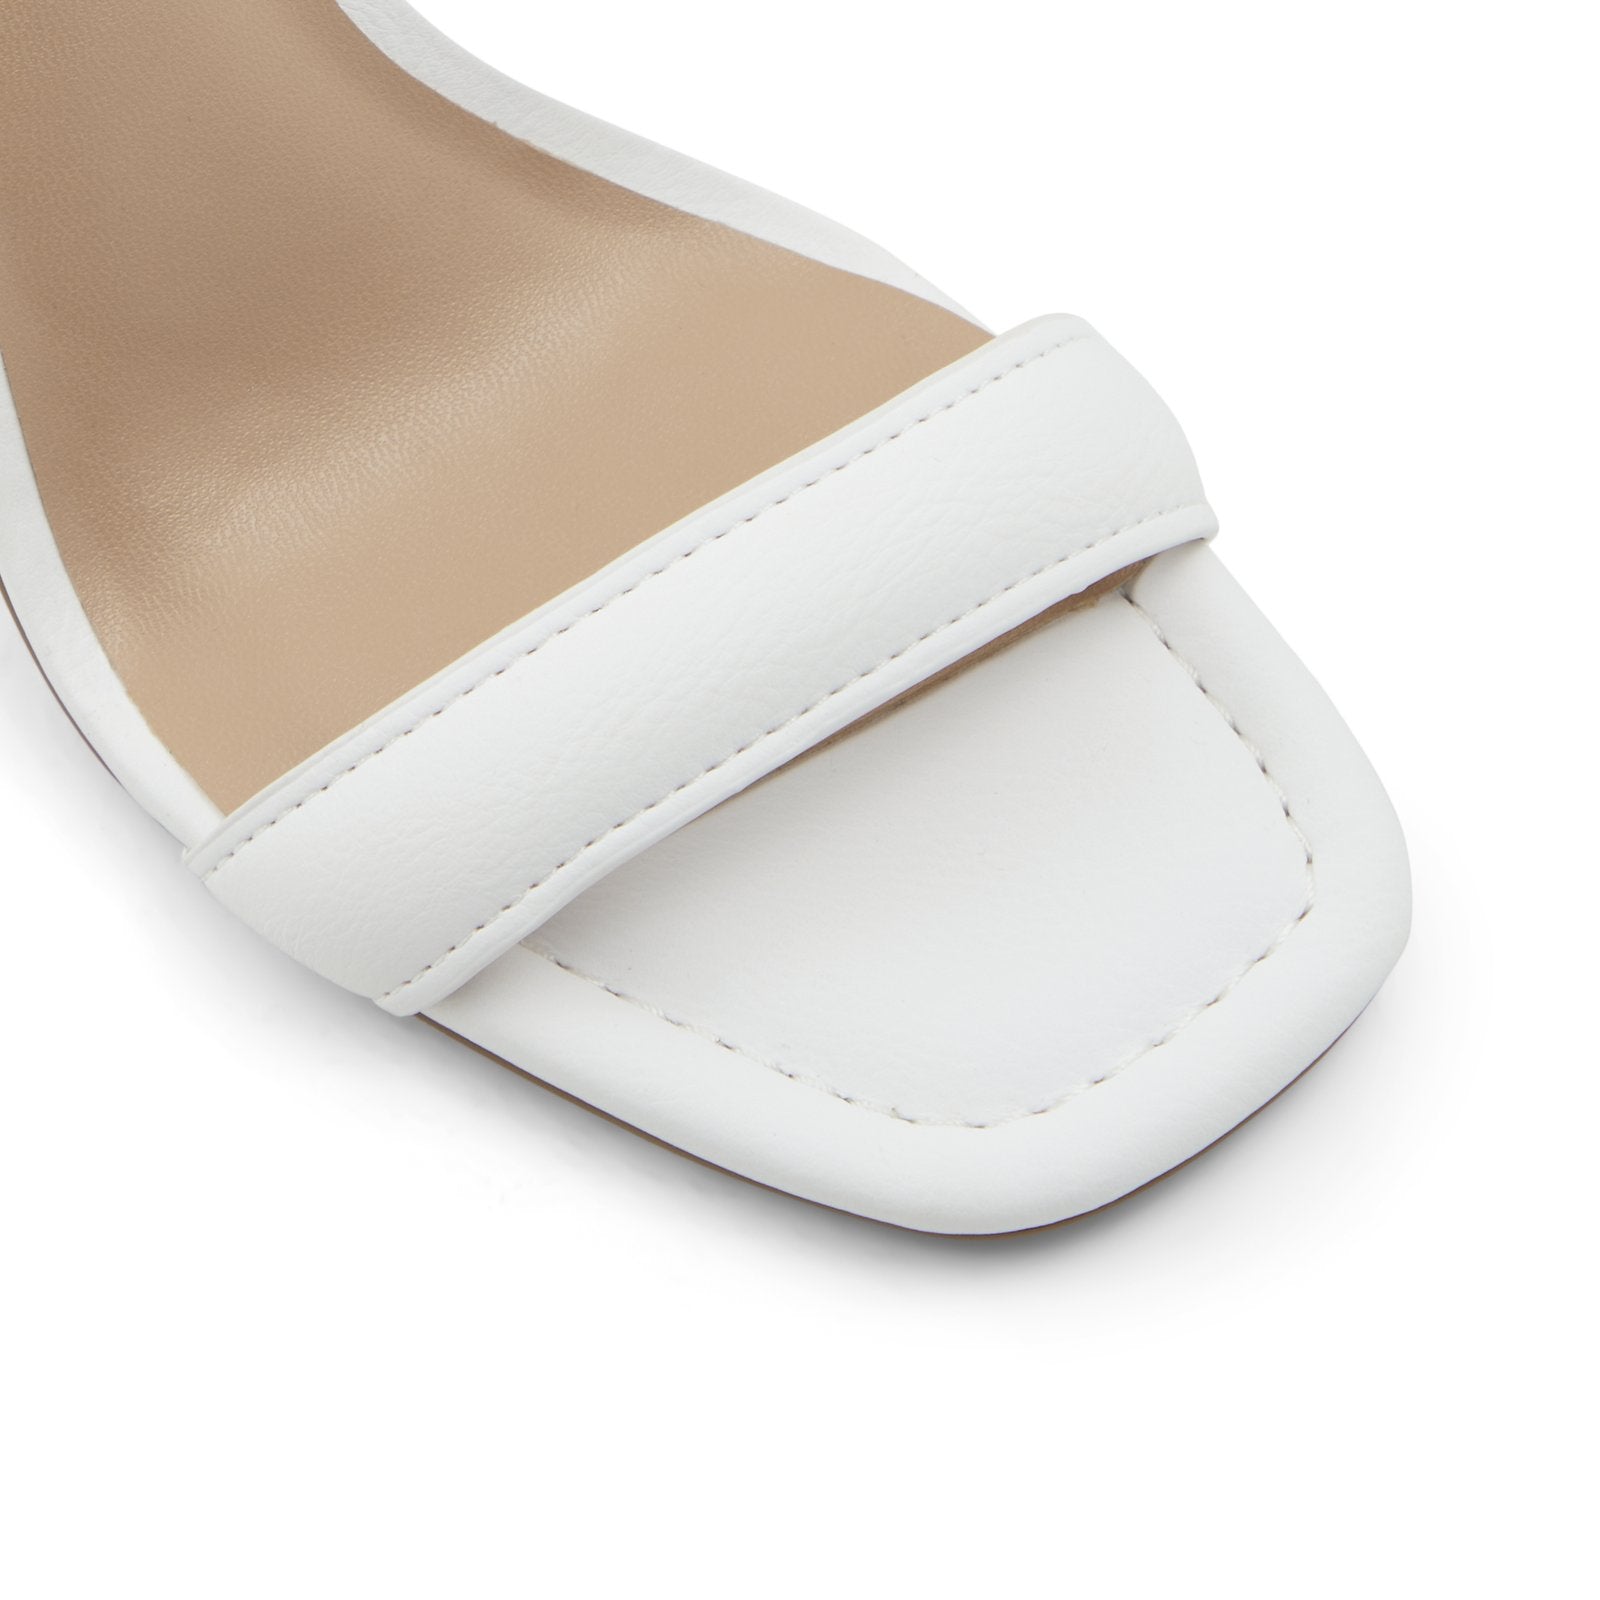 Katarina / Heeled Sandals Women Shoes - White - CALL IT SPRING KSA